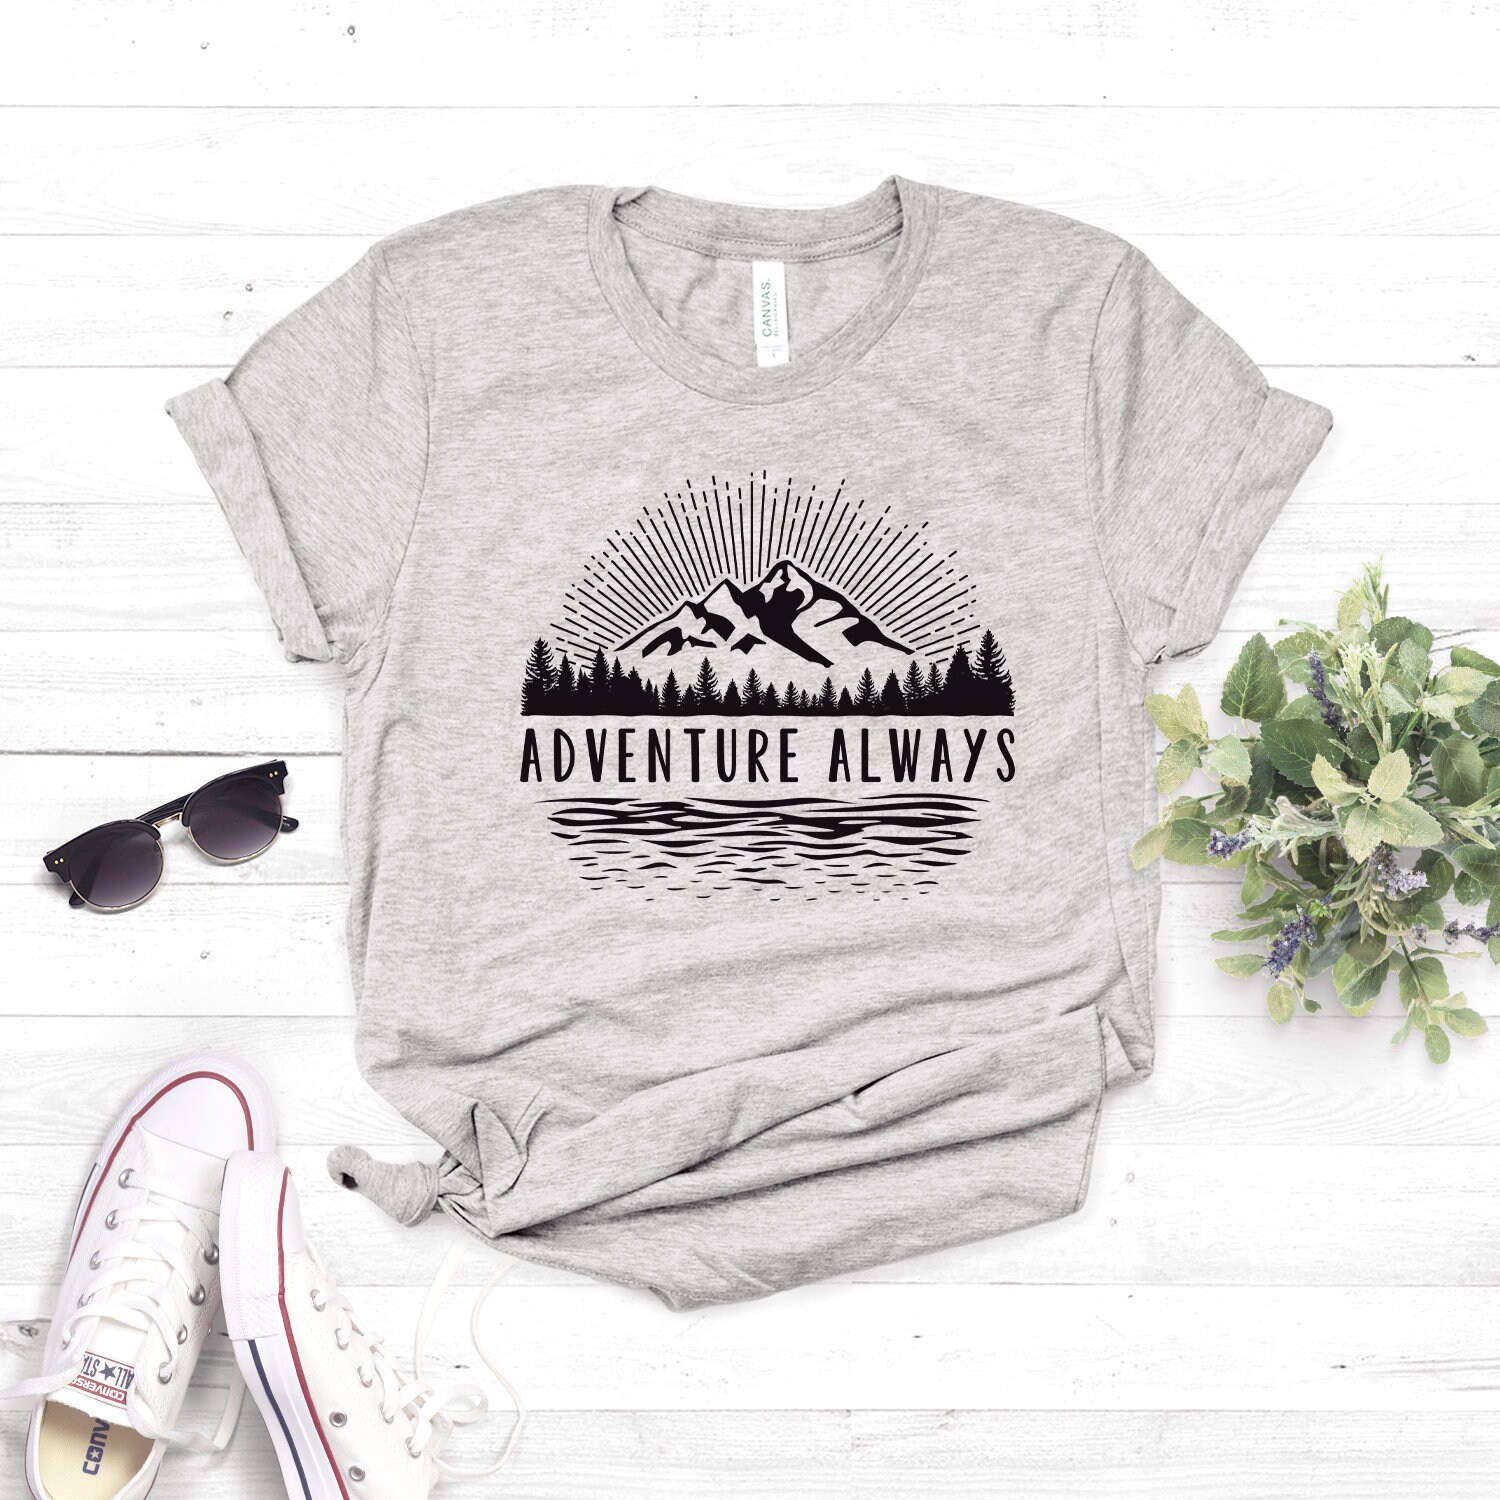 Mountains T-Shirt Adventure Always Shirt Mountain Shirt | Etsy